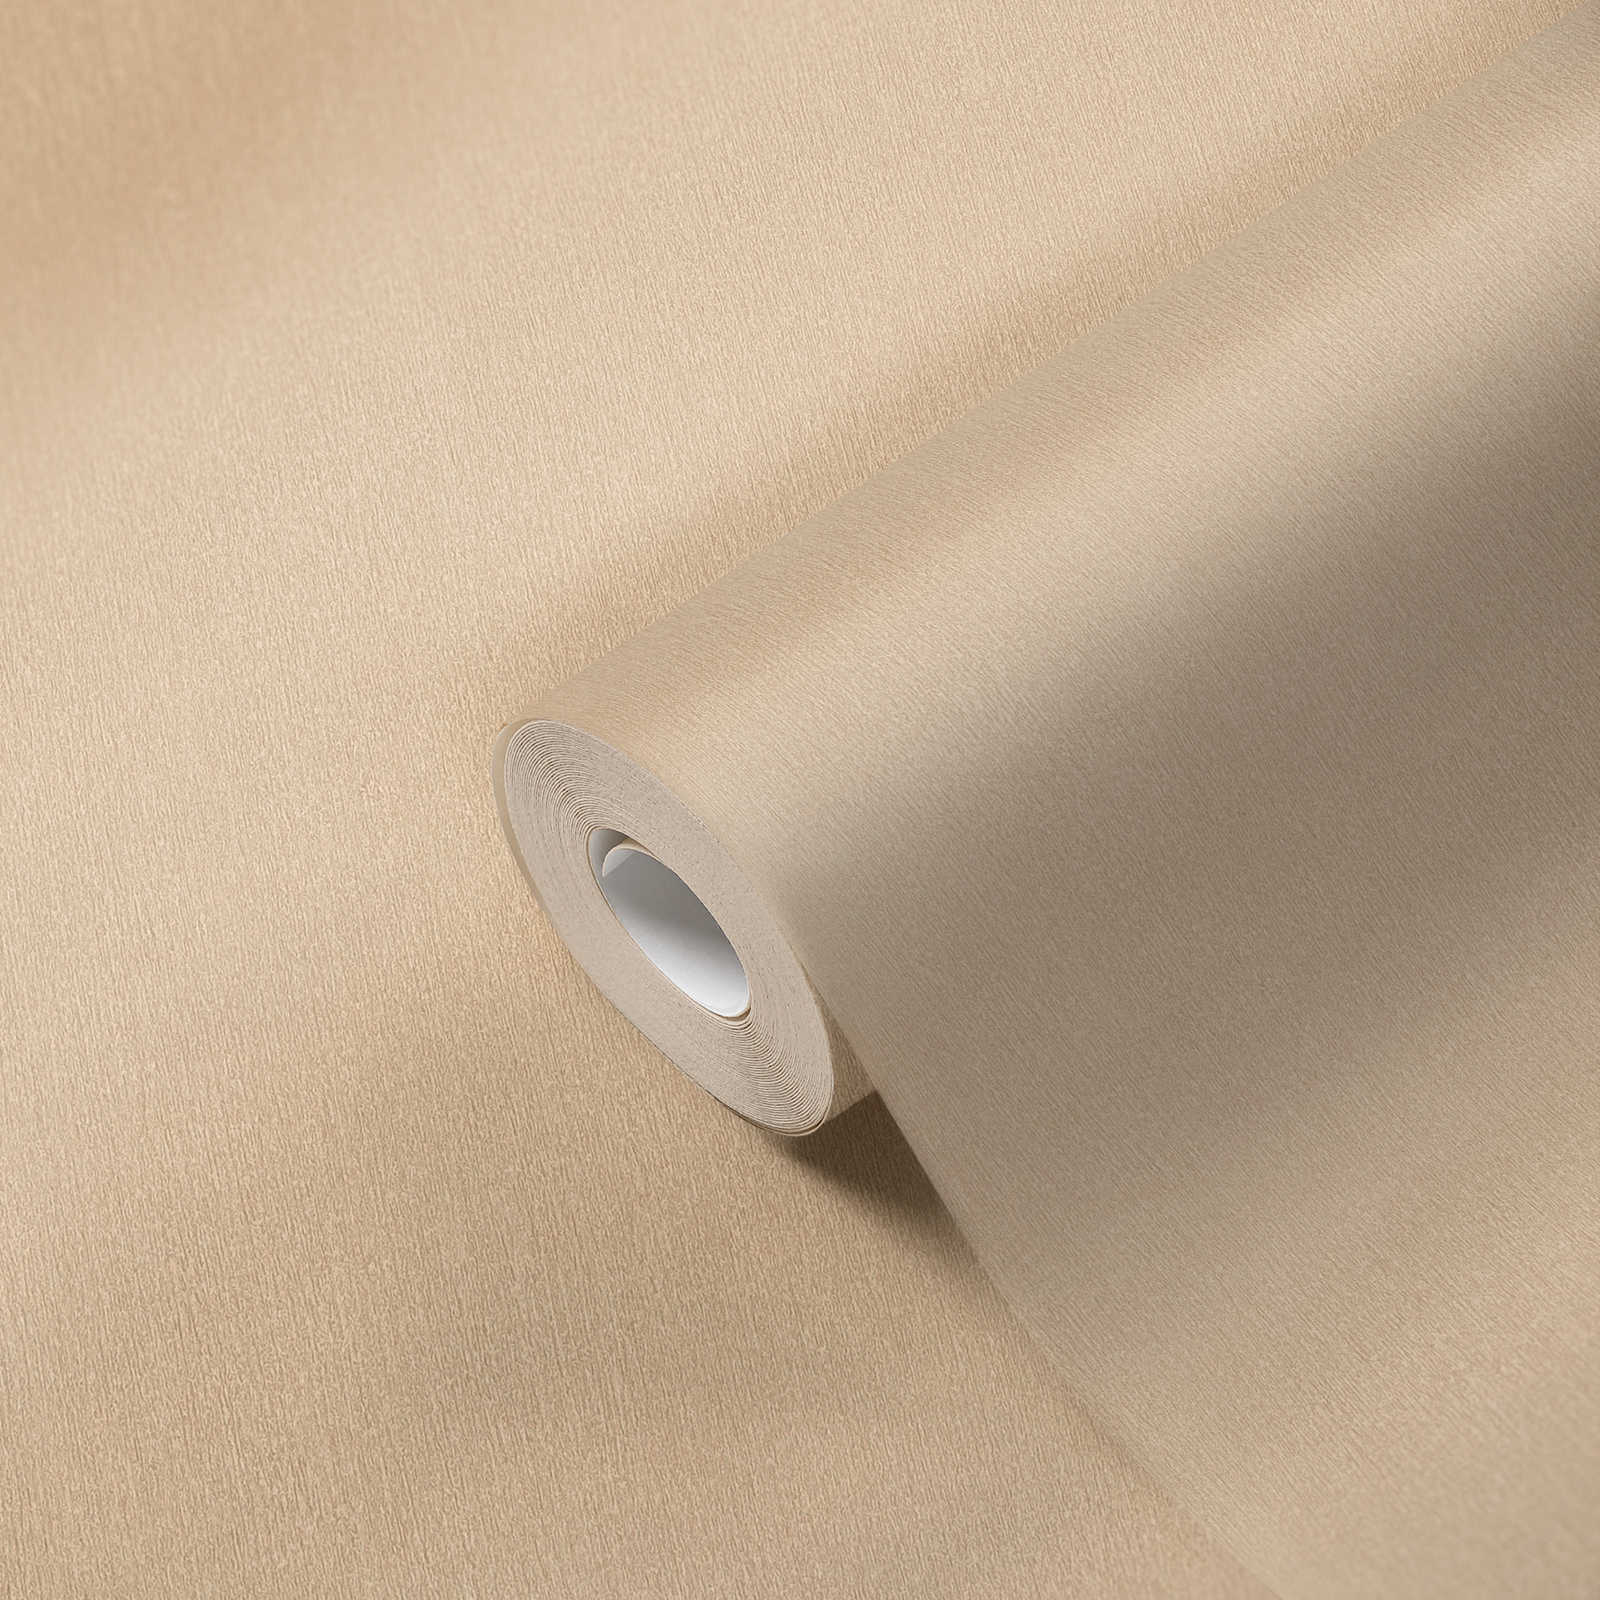             Beige wallpaper, plain & smooth non-woven
        